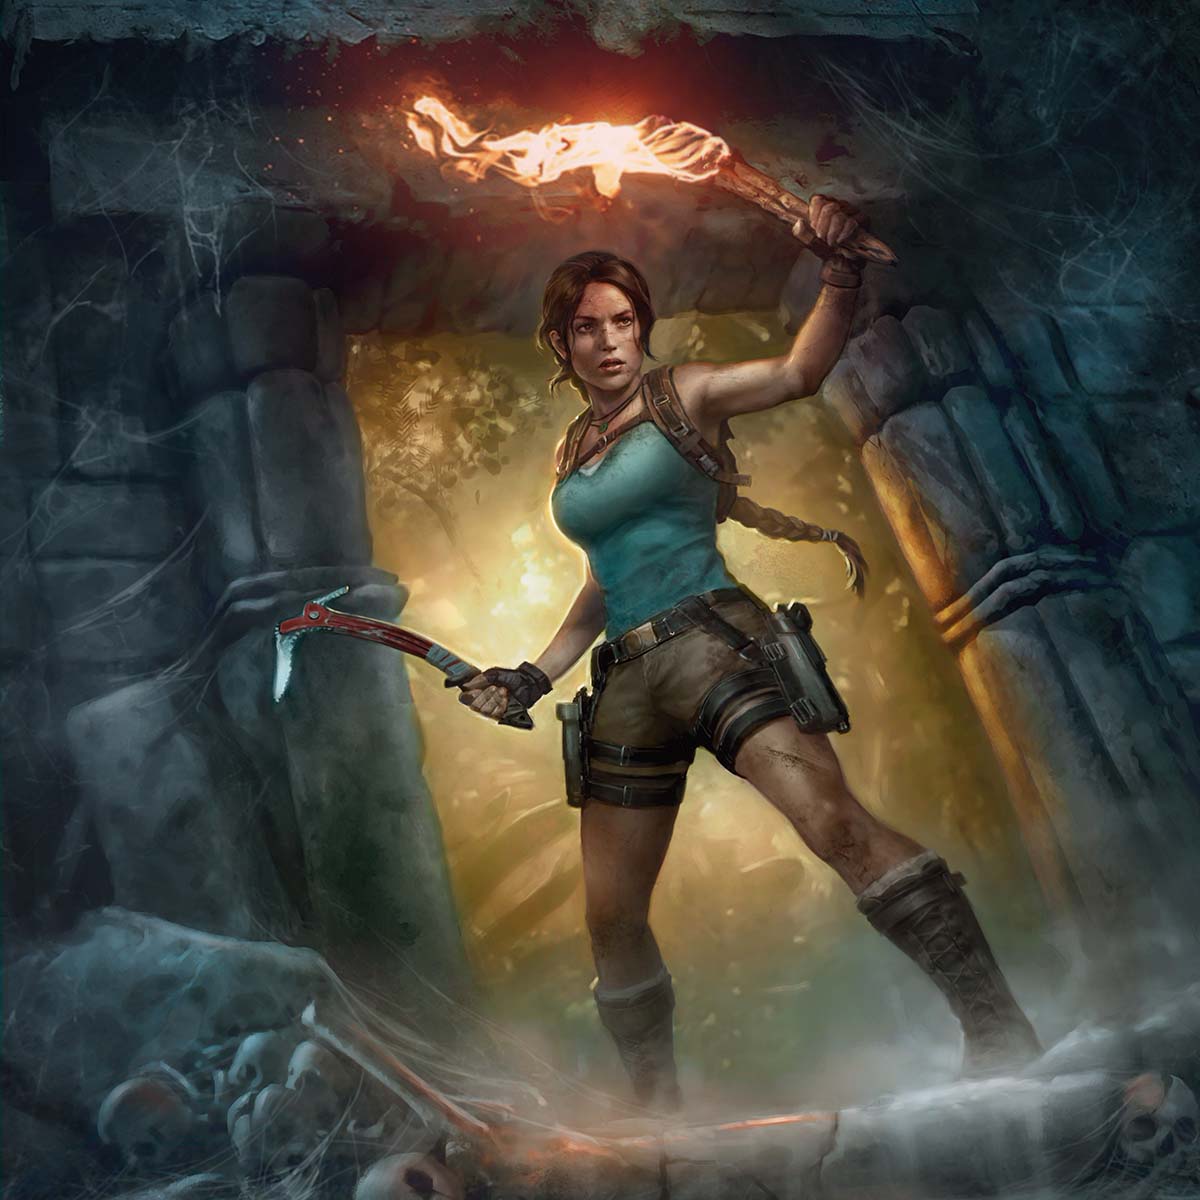 Magic The Gathering Secret Lair: Tomb Raider